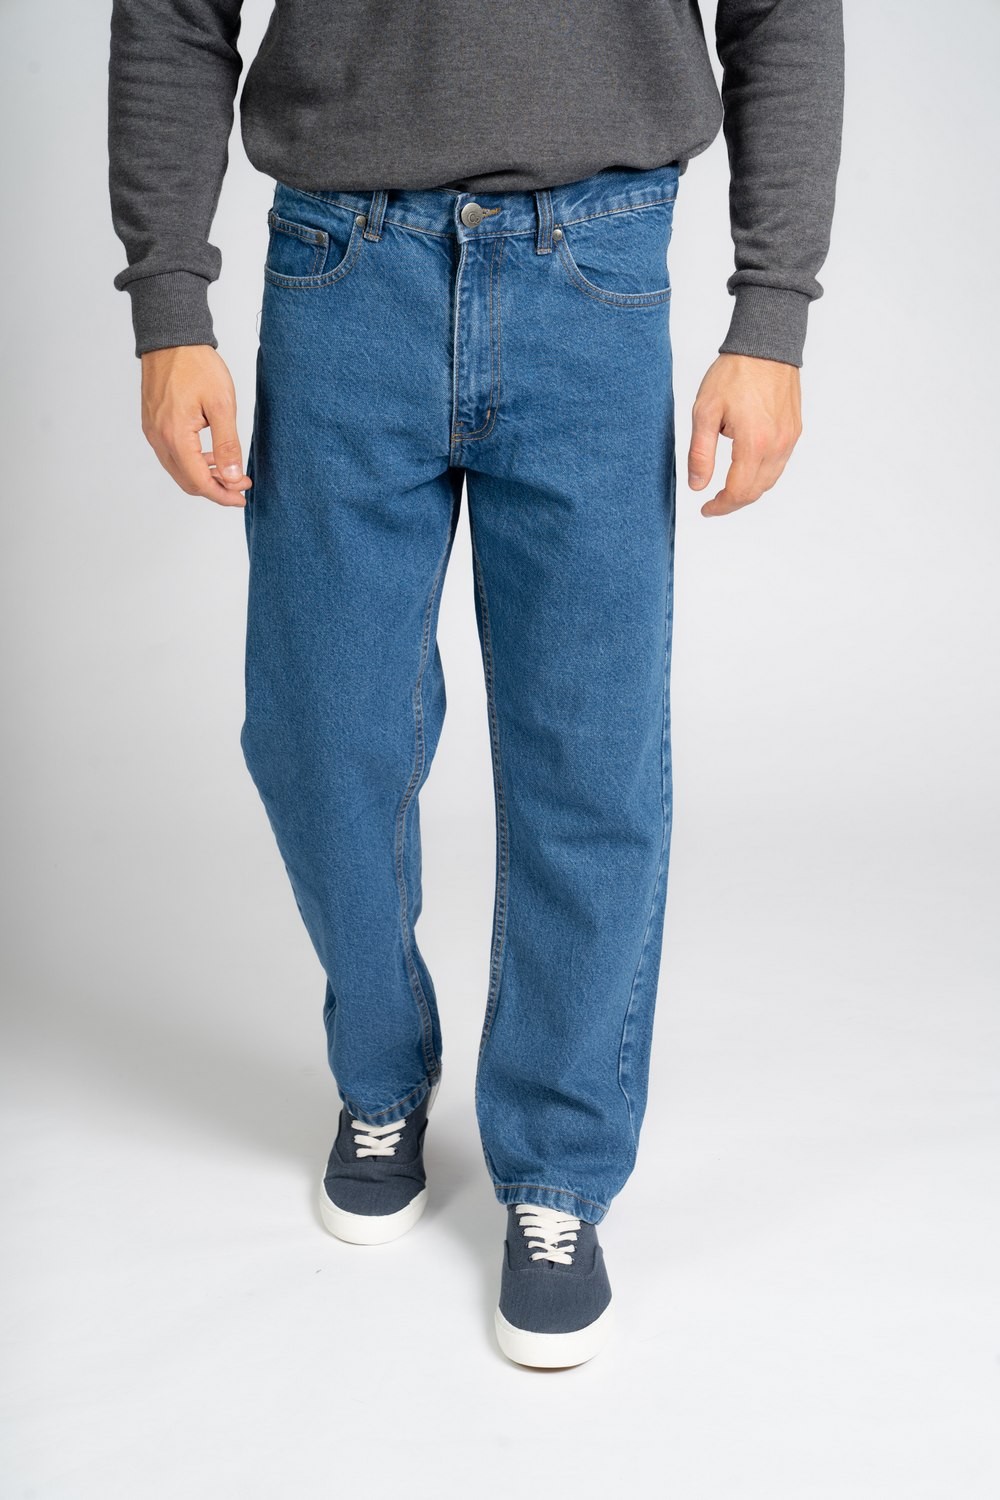 Carabou Jeans ACJ waist size 32L